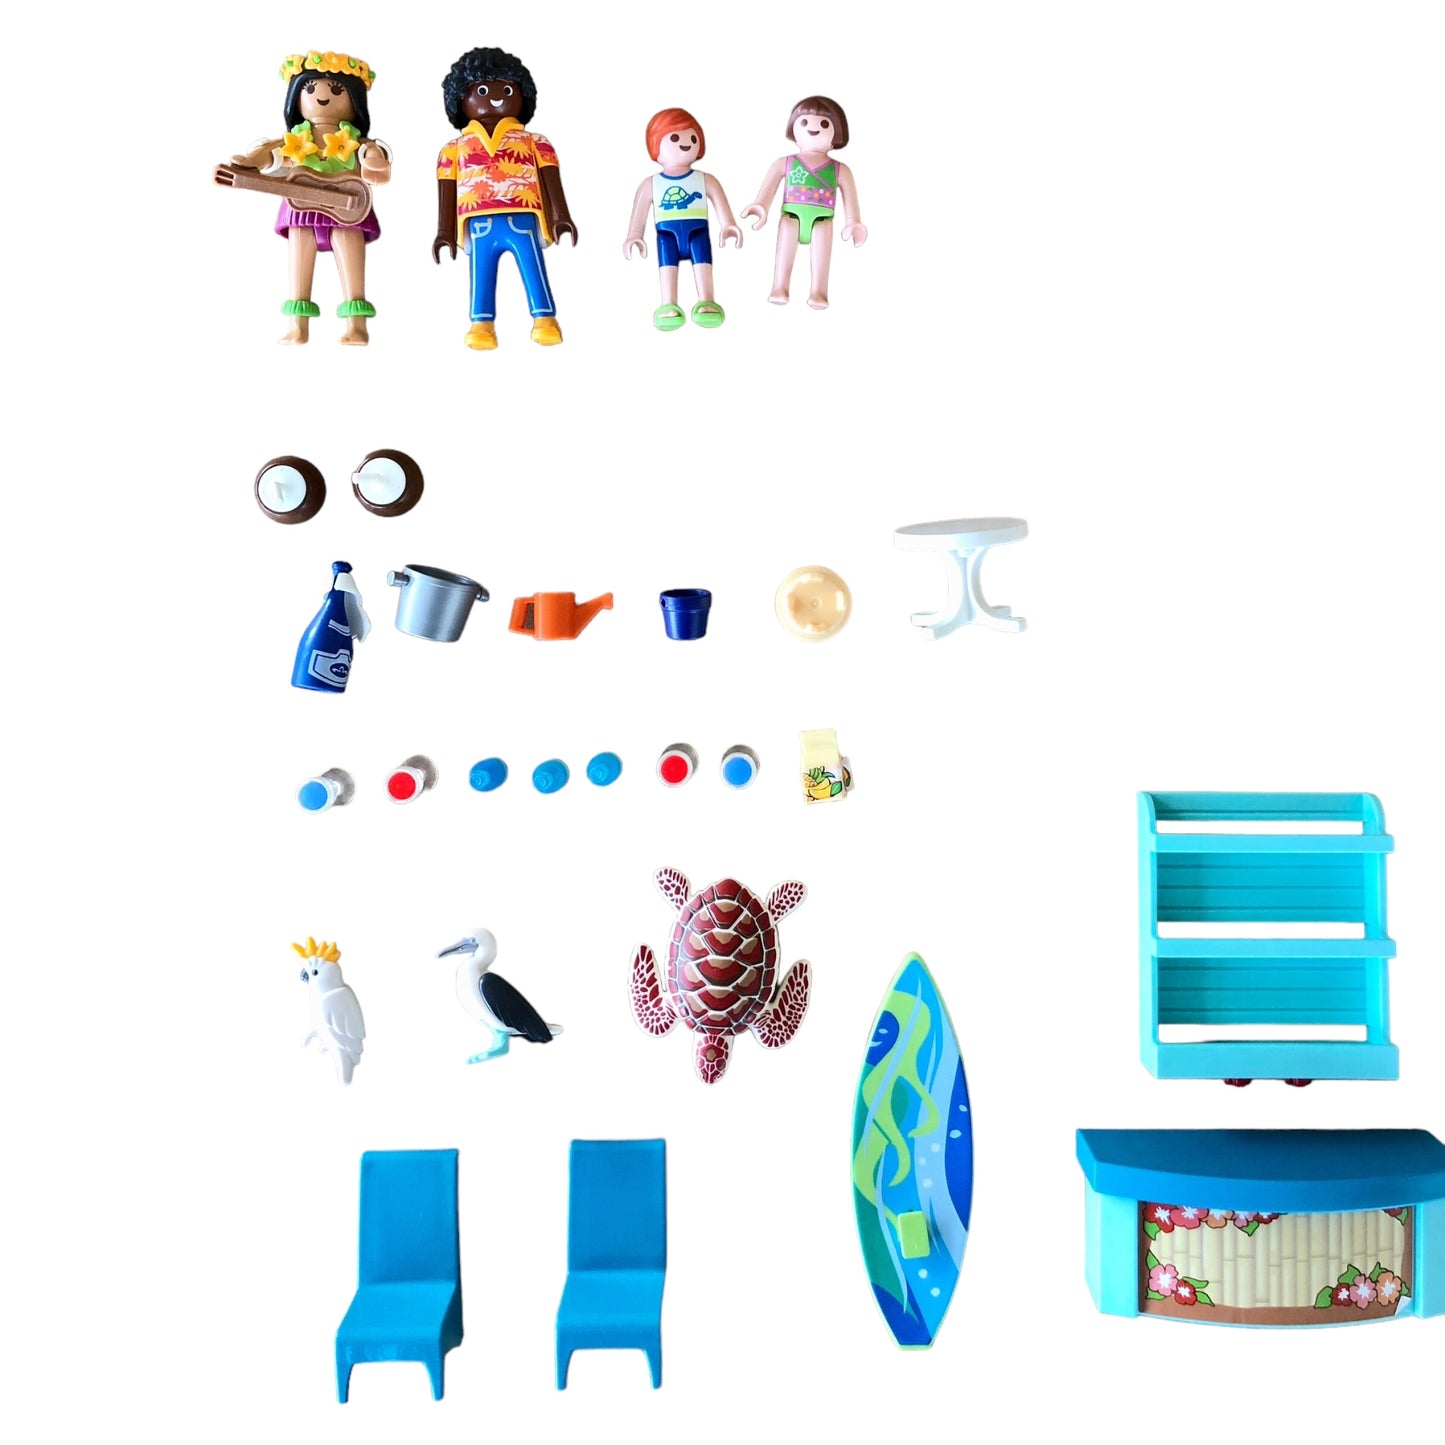 PLAYMOBIL® Family Fun Island Saftbar 6979